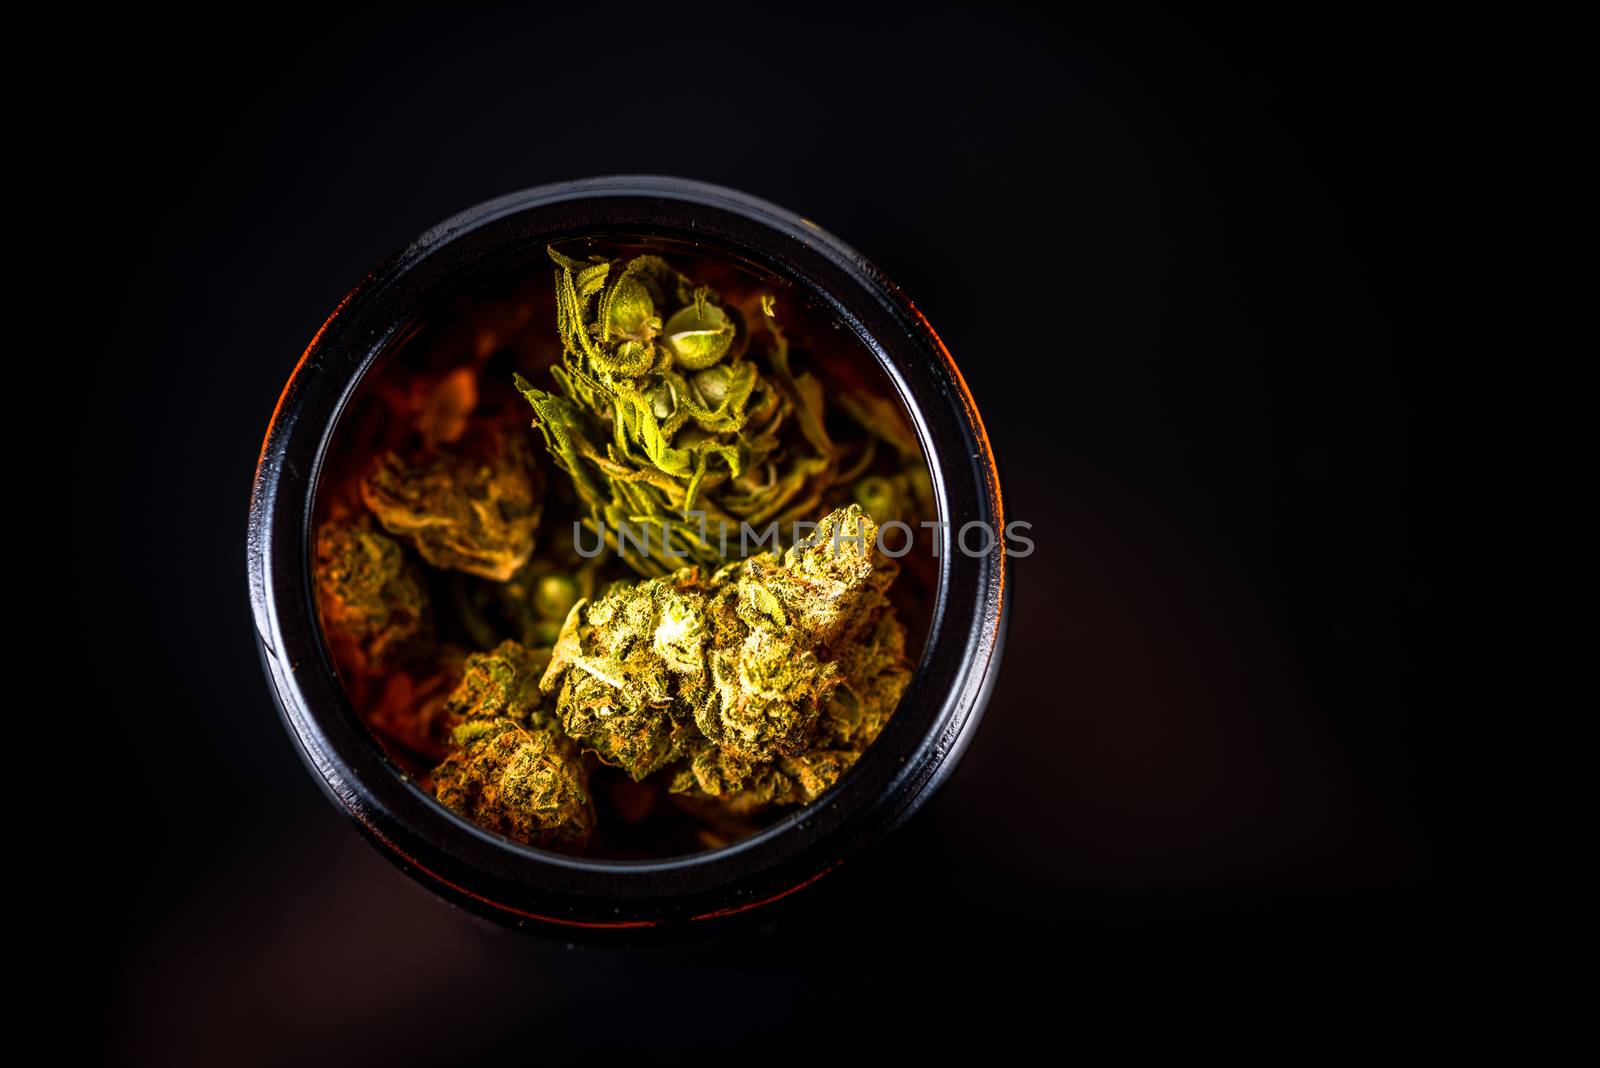 Cannabis Flower Buds in Glass Jar, Top Down Close Up. Dark Background. Medical Marijuana Concept.